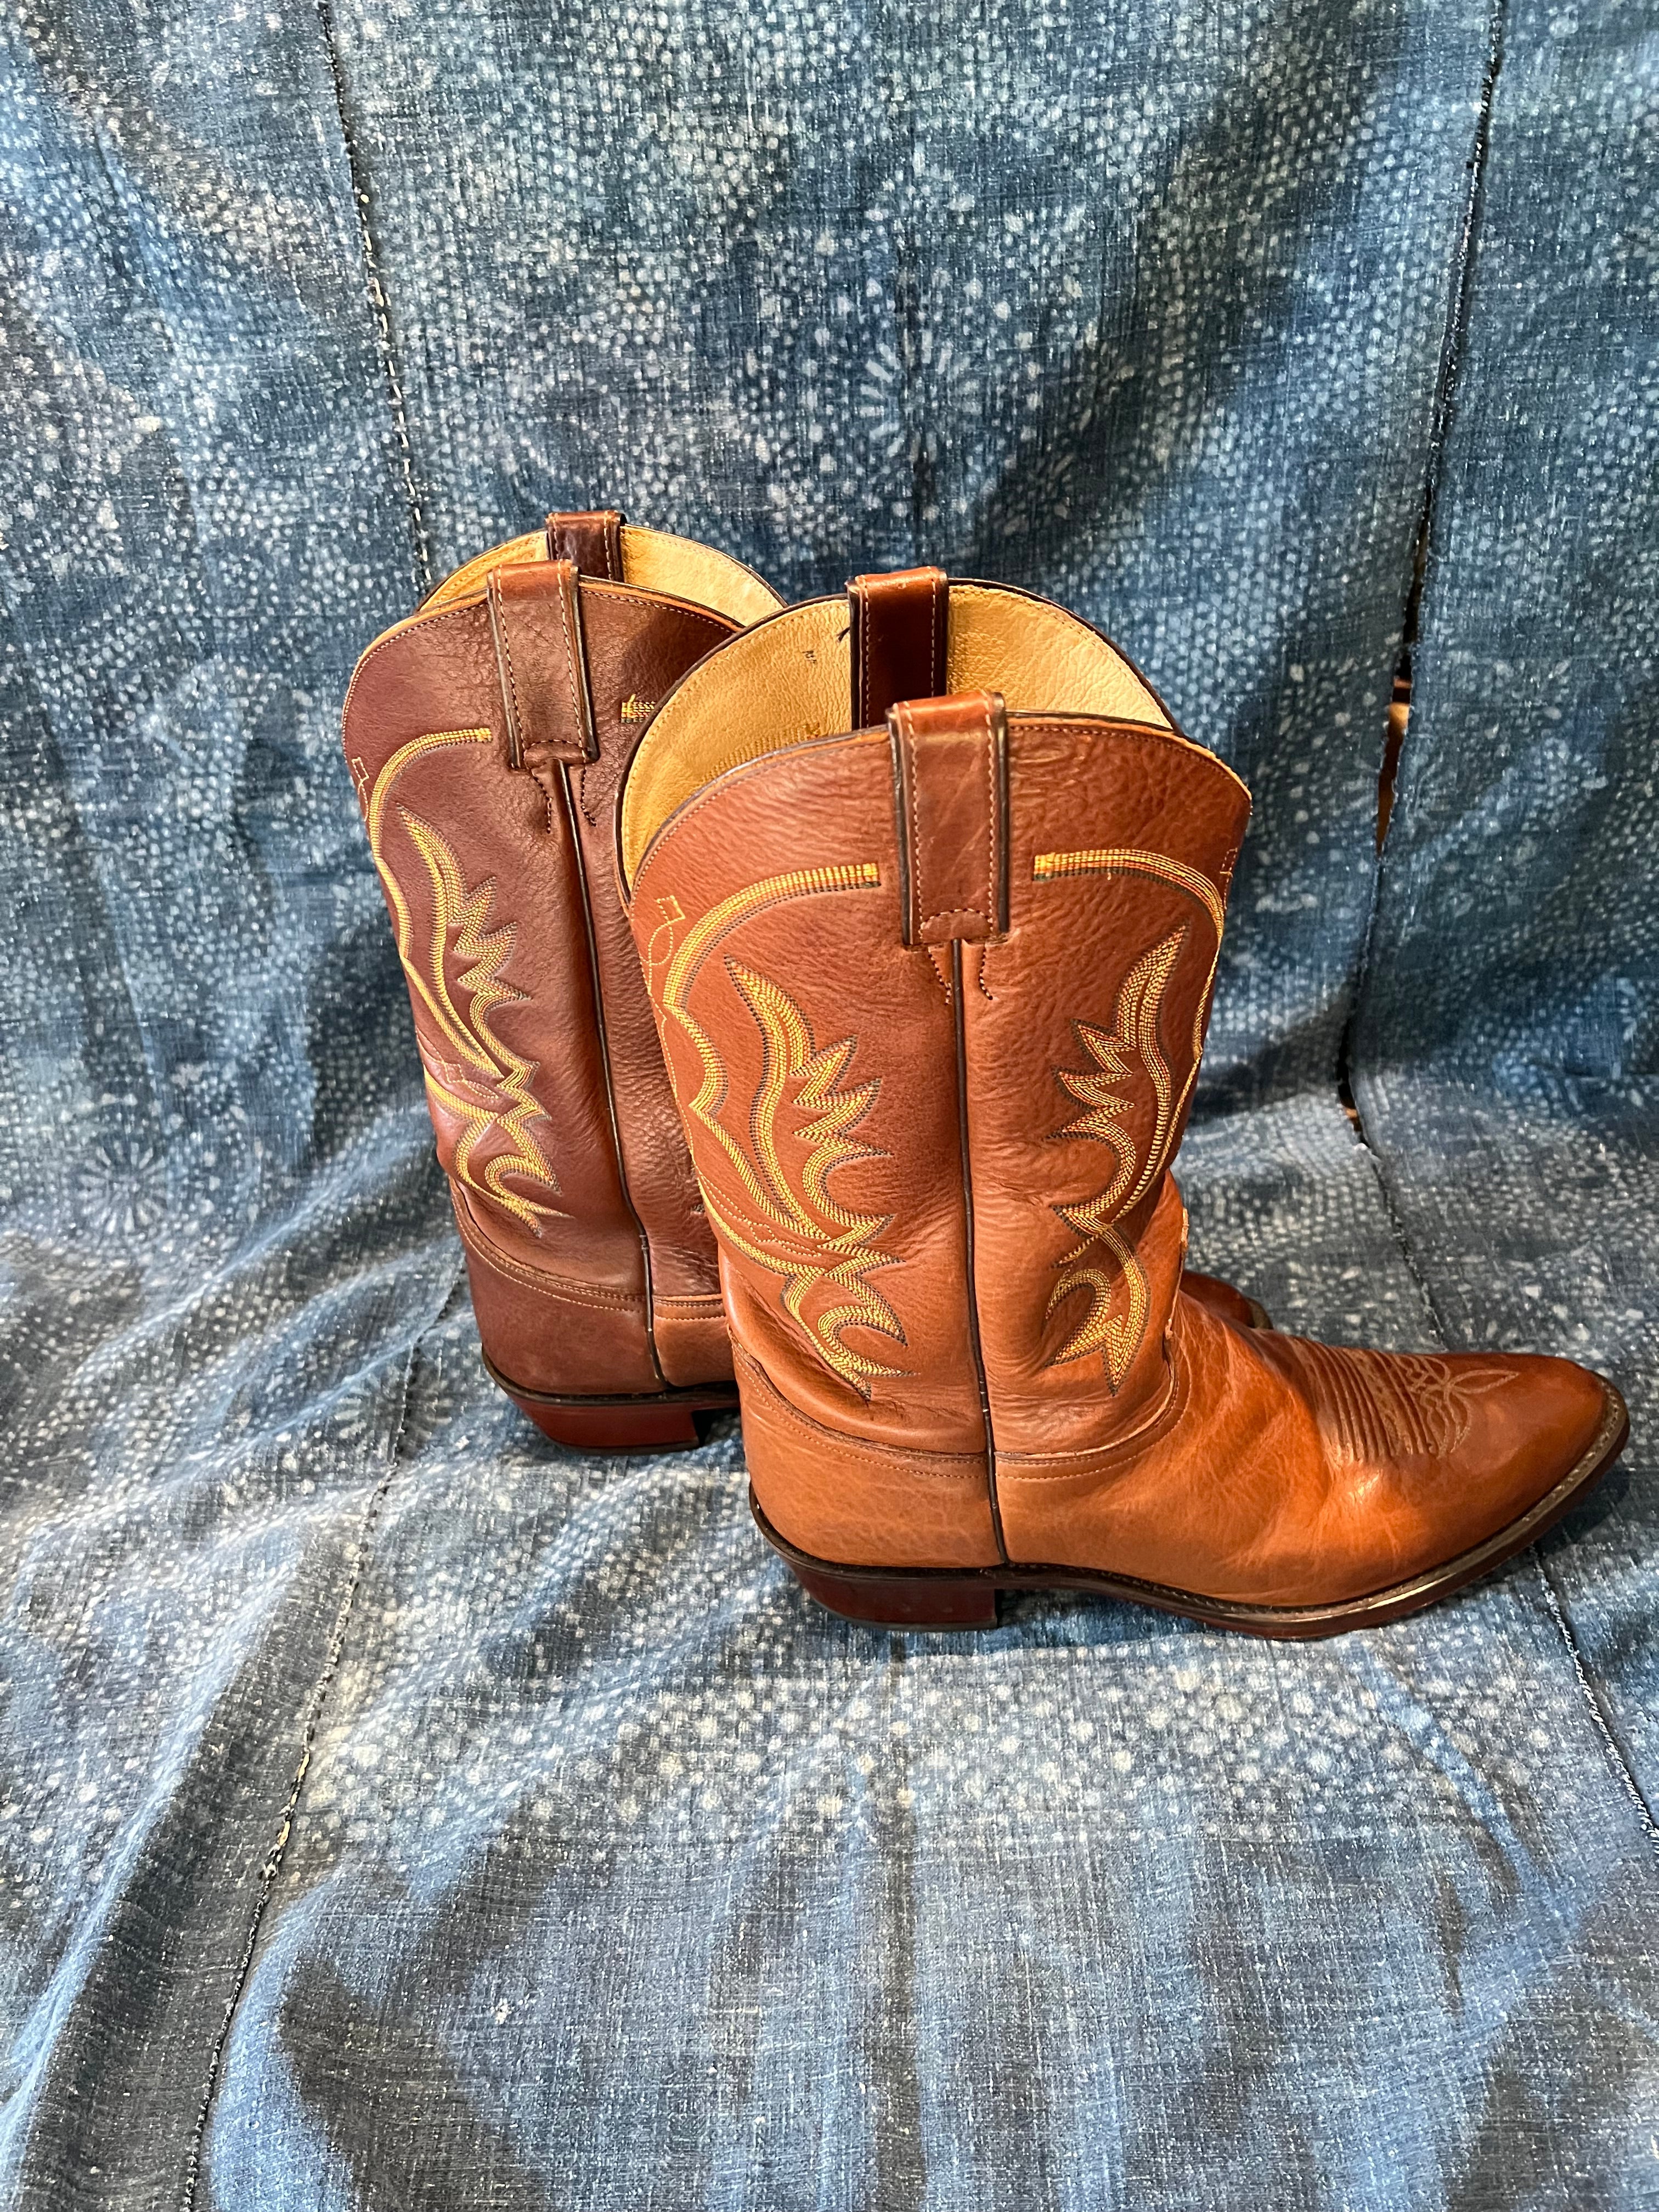 Vintage Justin Cowboy Boots